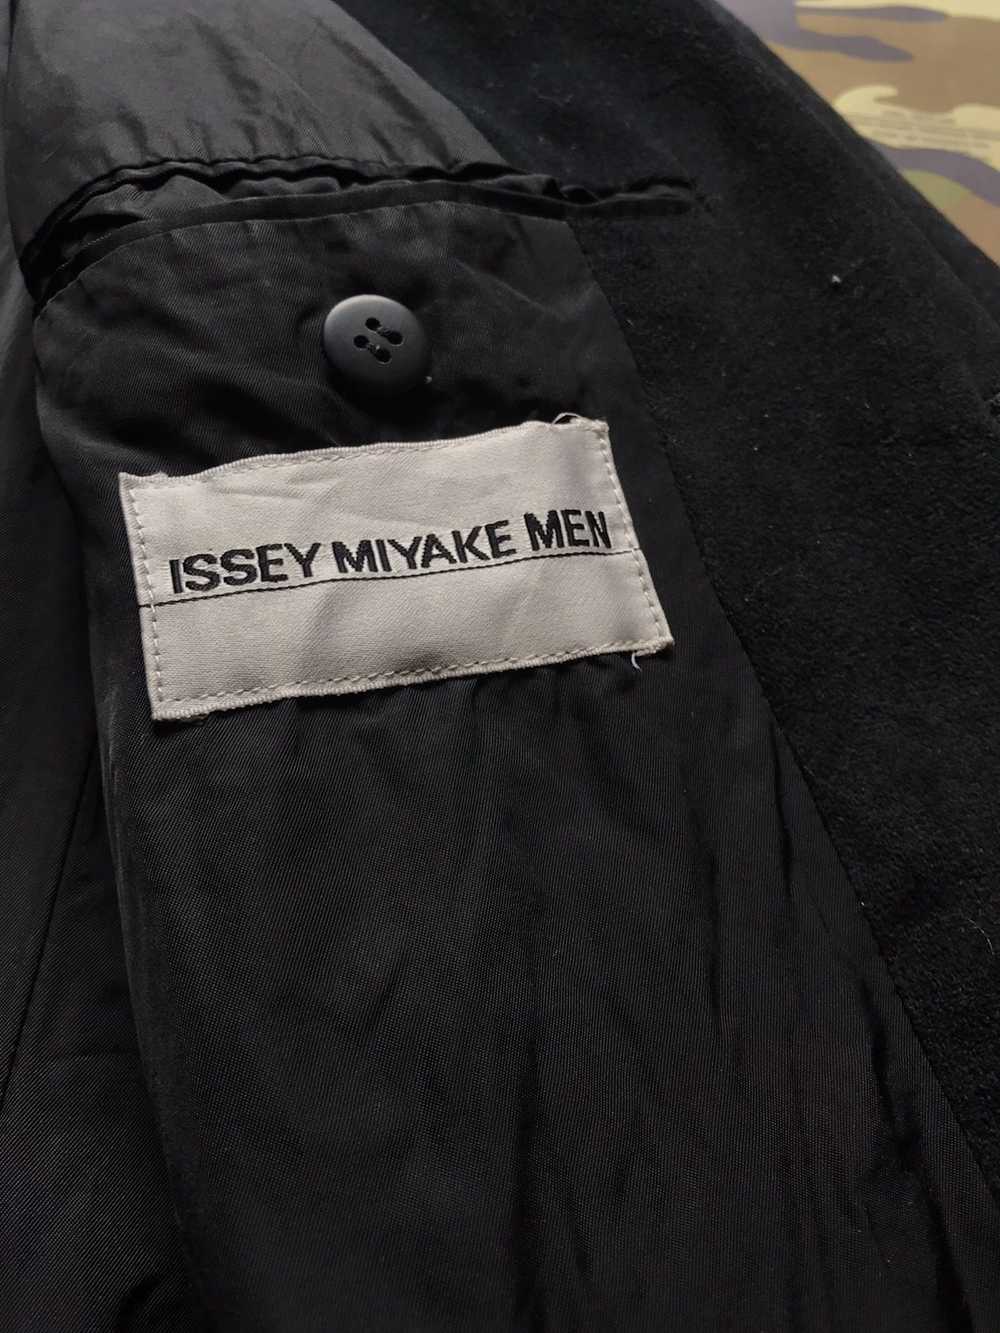 Issey Miyake Velvet IS Men Jacket - image 4